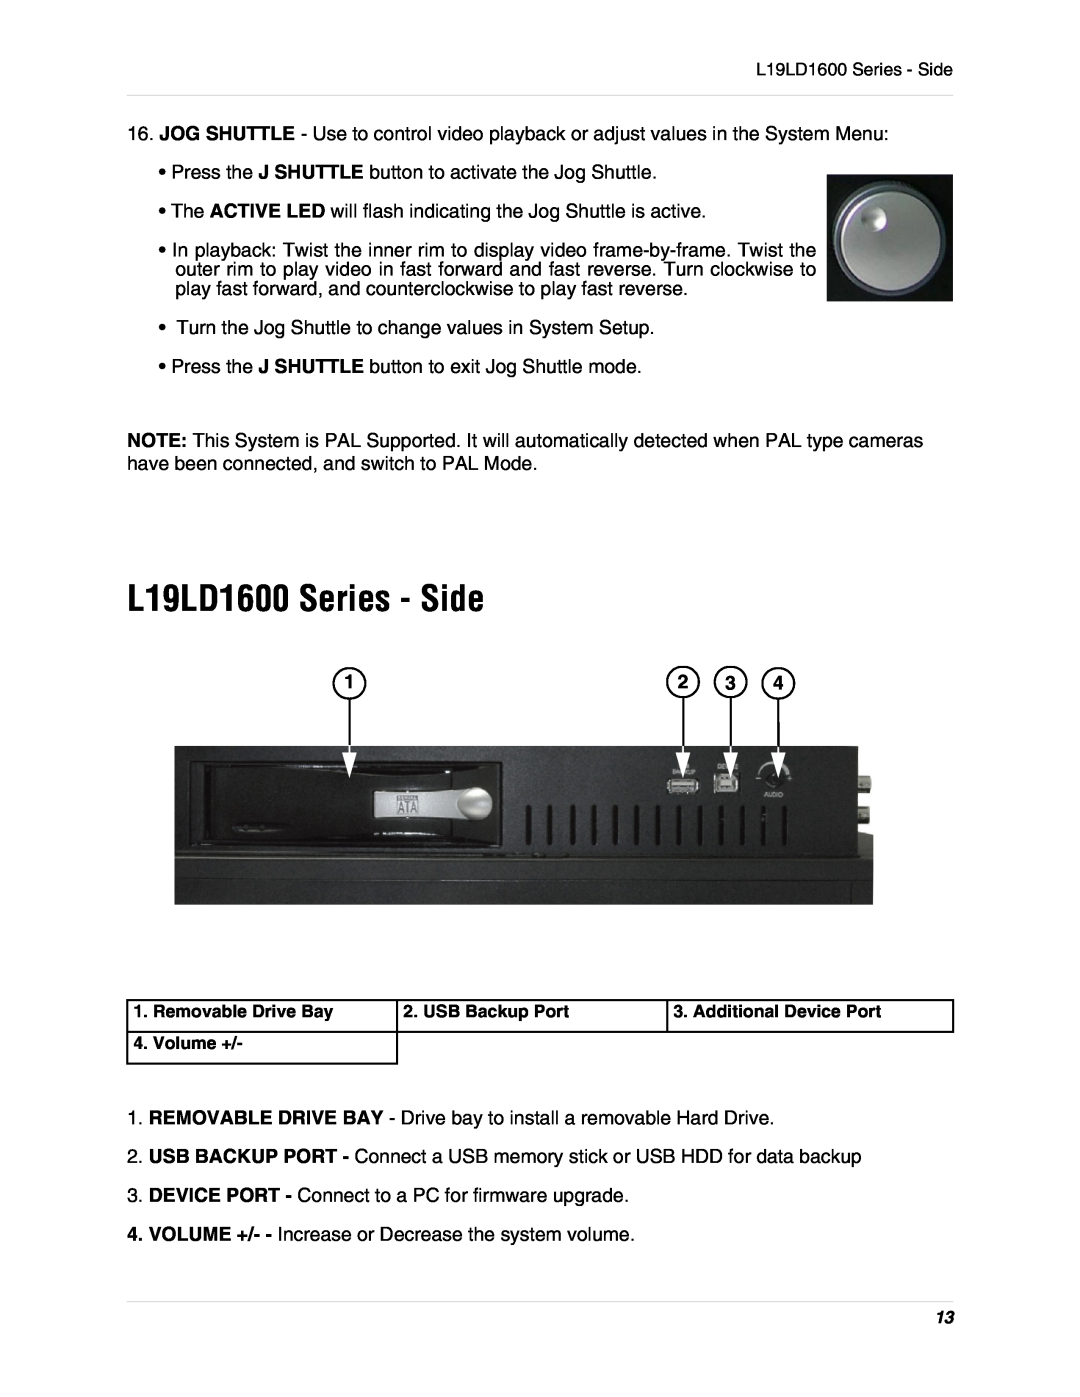 LOREX Technology L19lD1616501 L19LD1600 Series - Side, Removable Drive Bay, USB Backup Port, Additional Device Port 